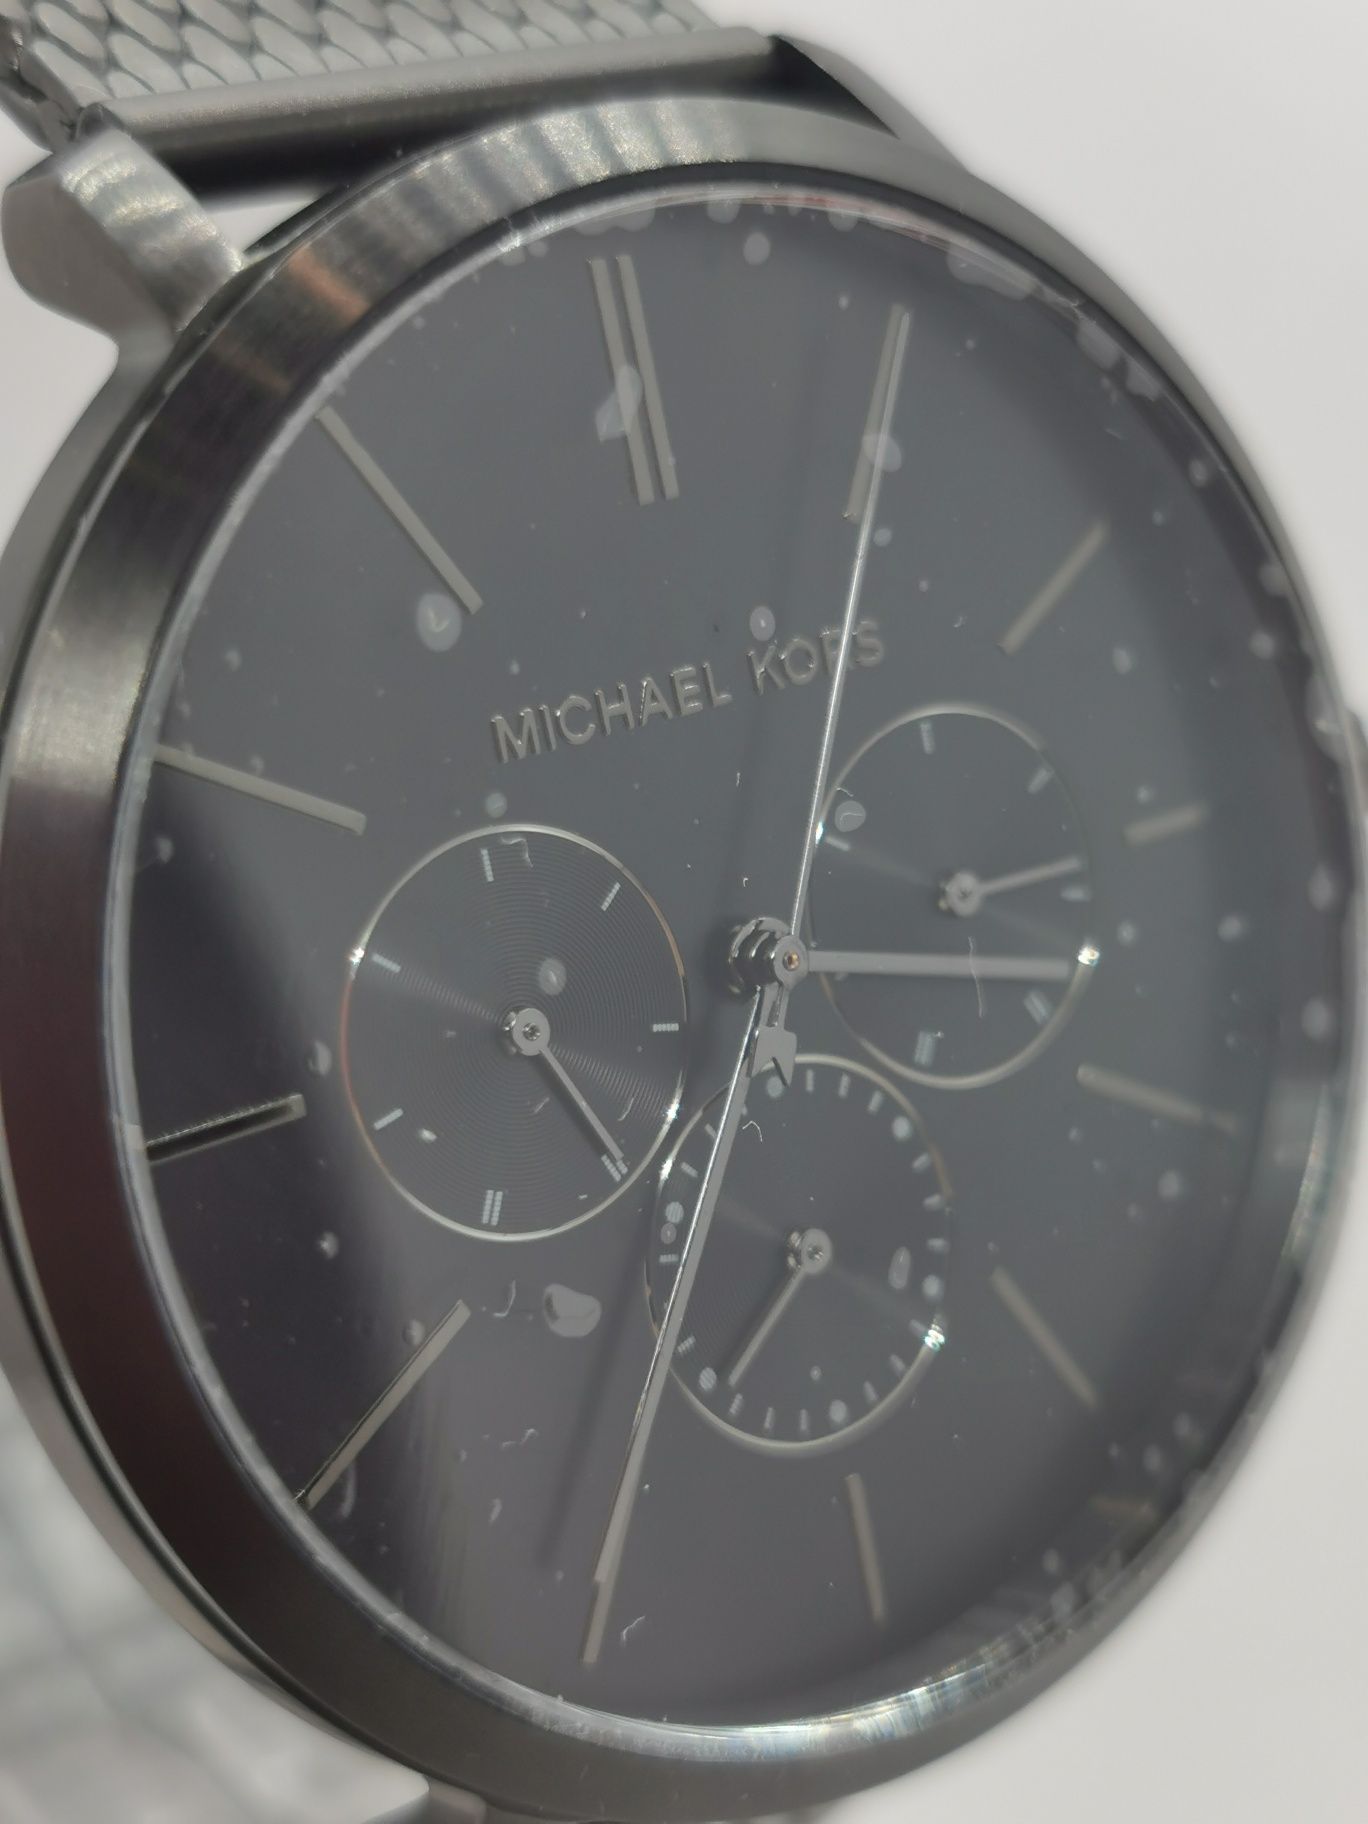 Michael Kors Mk 8778 męski zegarek. NOWY